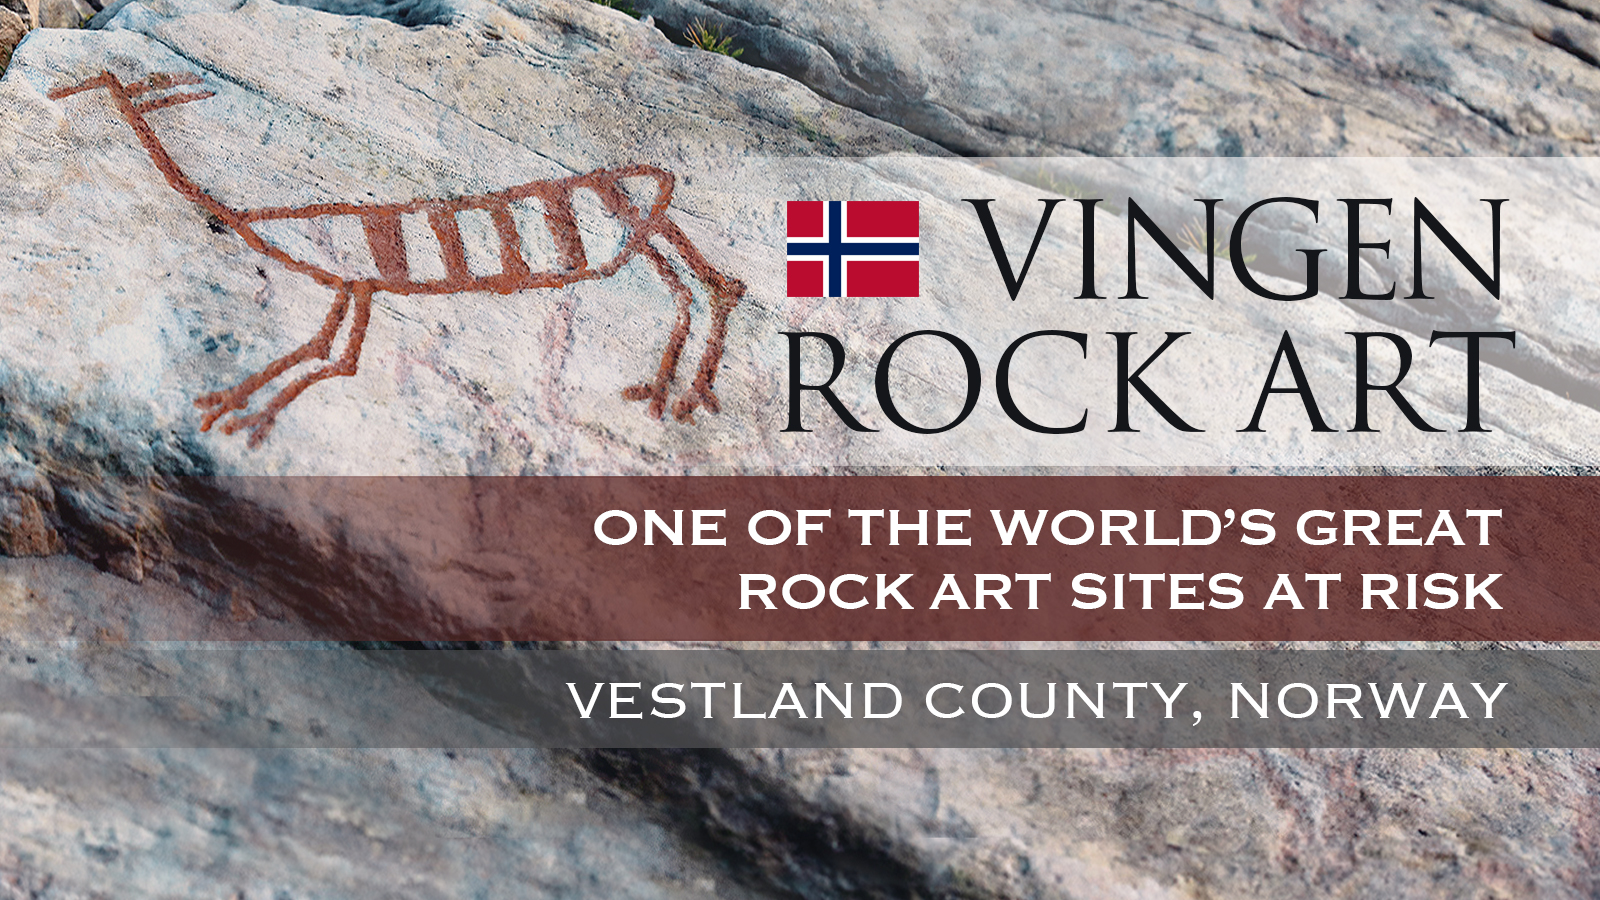 ICOMOS International Scientific Committee on Rock Art Norway Vingen rock art petroglyphs at risk